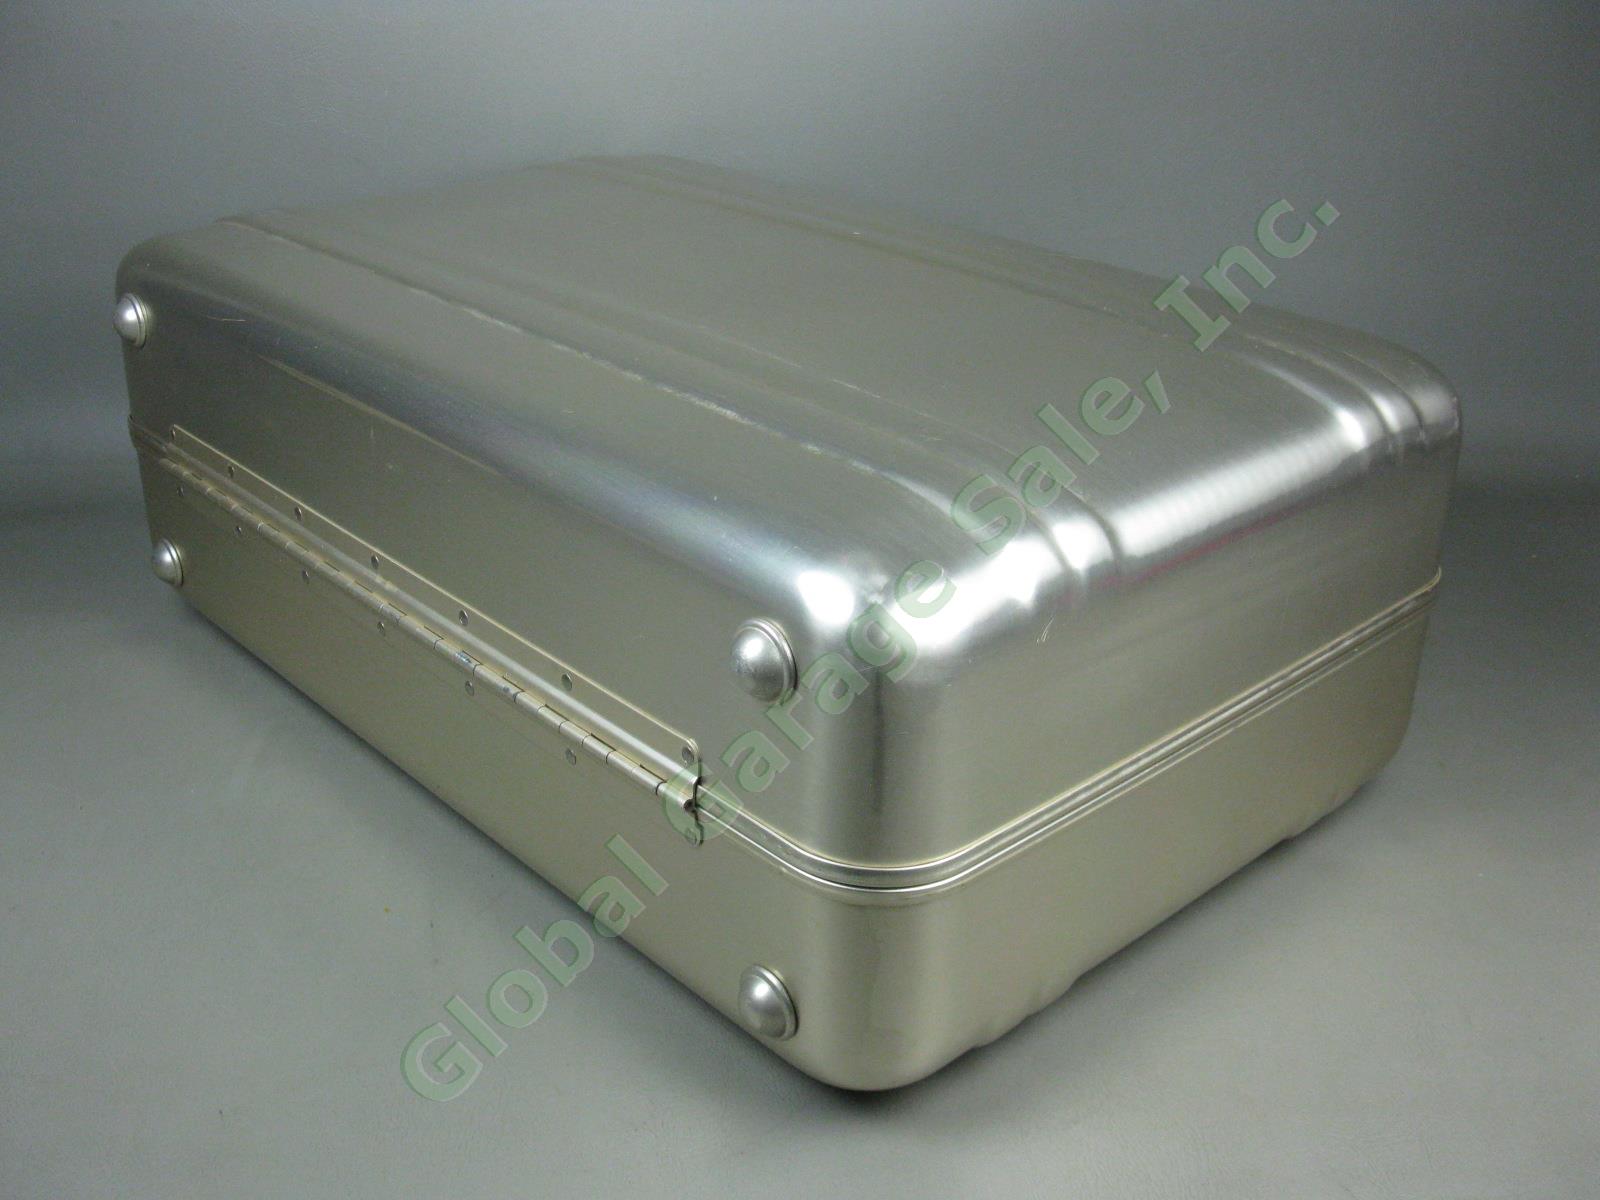 Zero Halliburton Presto Aluminum Combo Lock Briefcase Suitcase Luggage 21x13x8 4